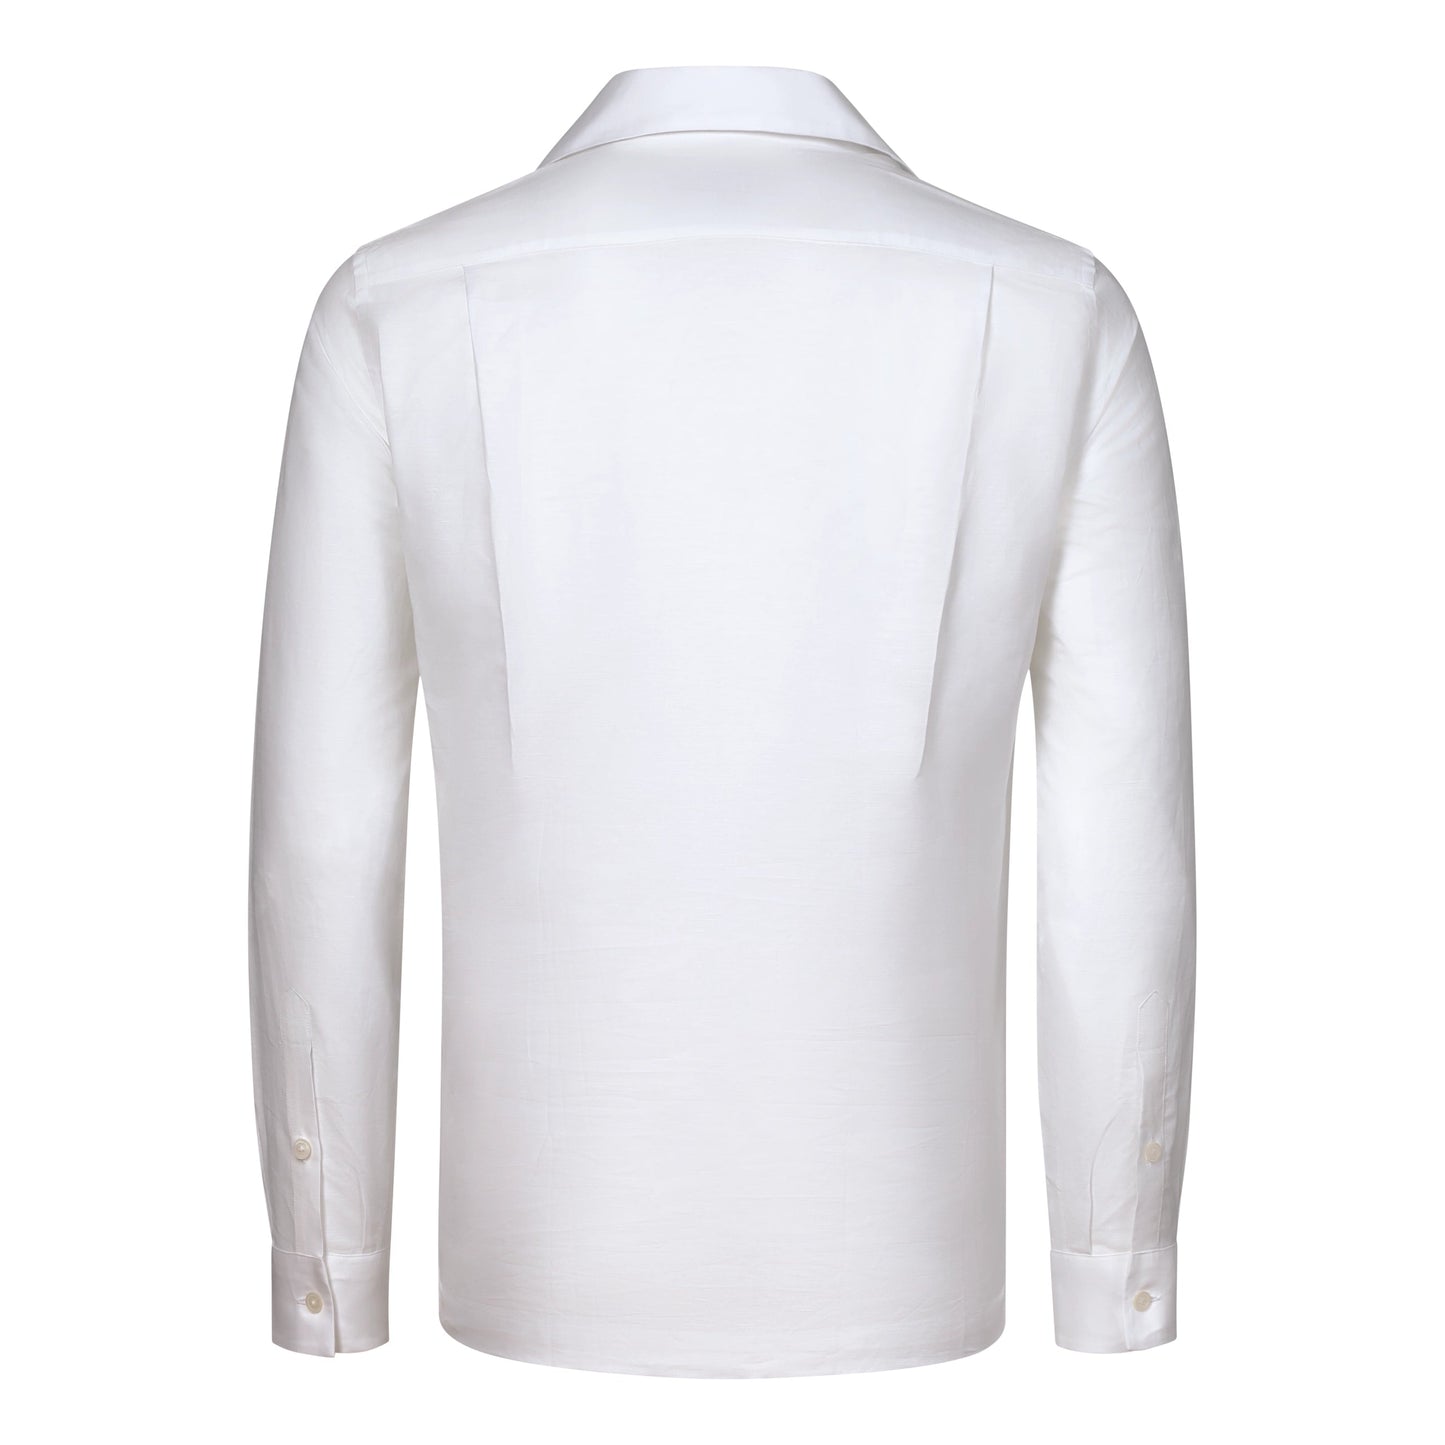 Sease Linen - Cotton Blend Polo Shirt in White - SARTALE